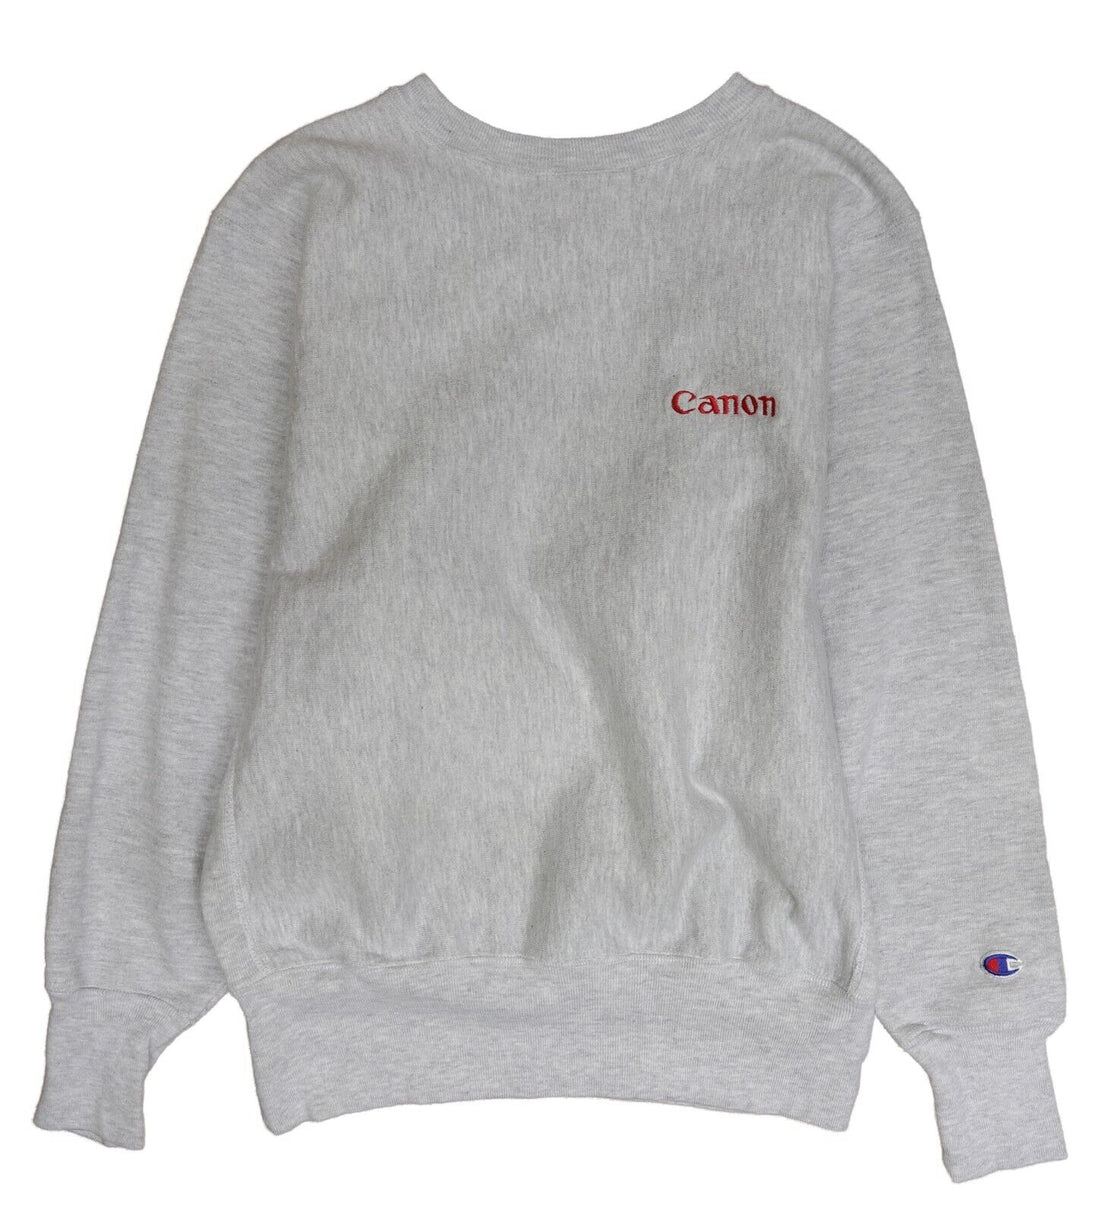 Vintage Canon Champion Reverse Weave Sweatshirt Crewneck Size Medium Gray 90s